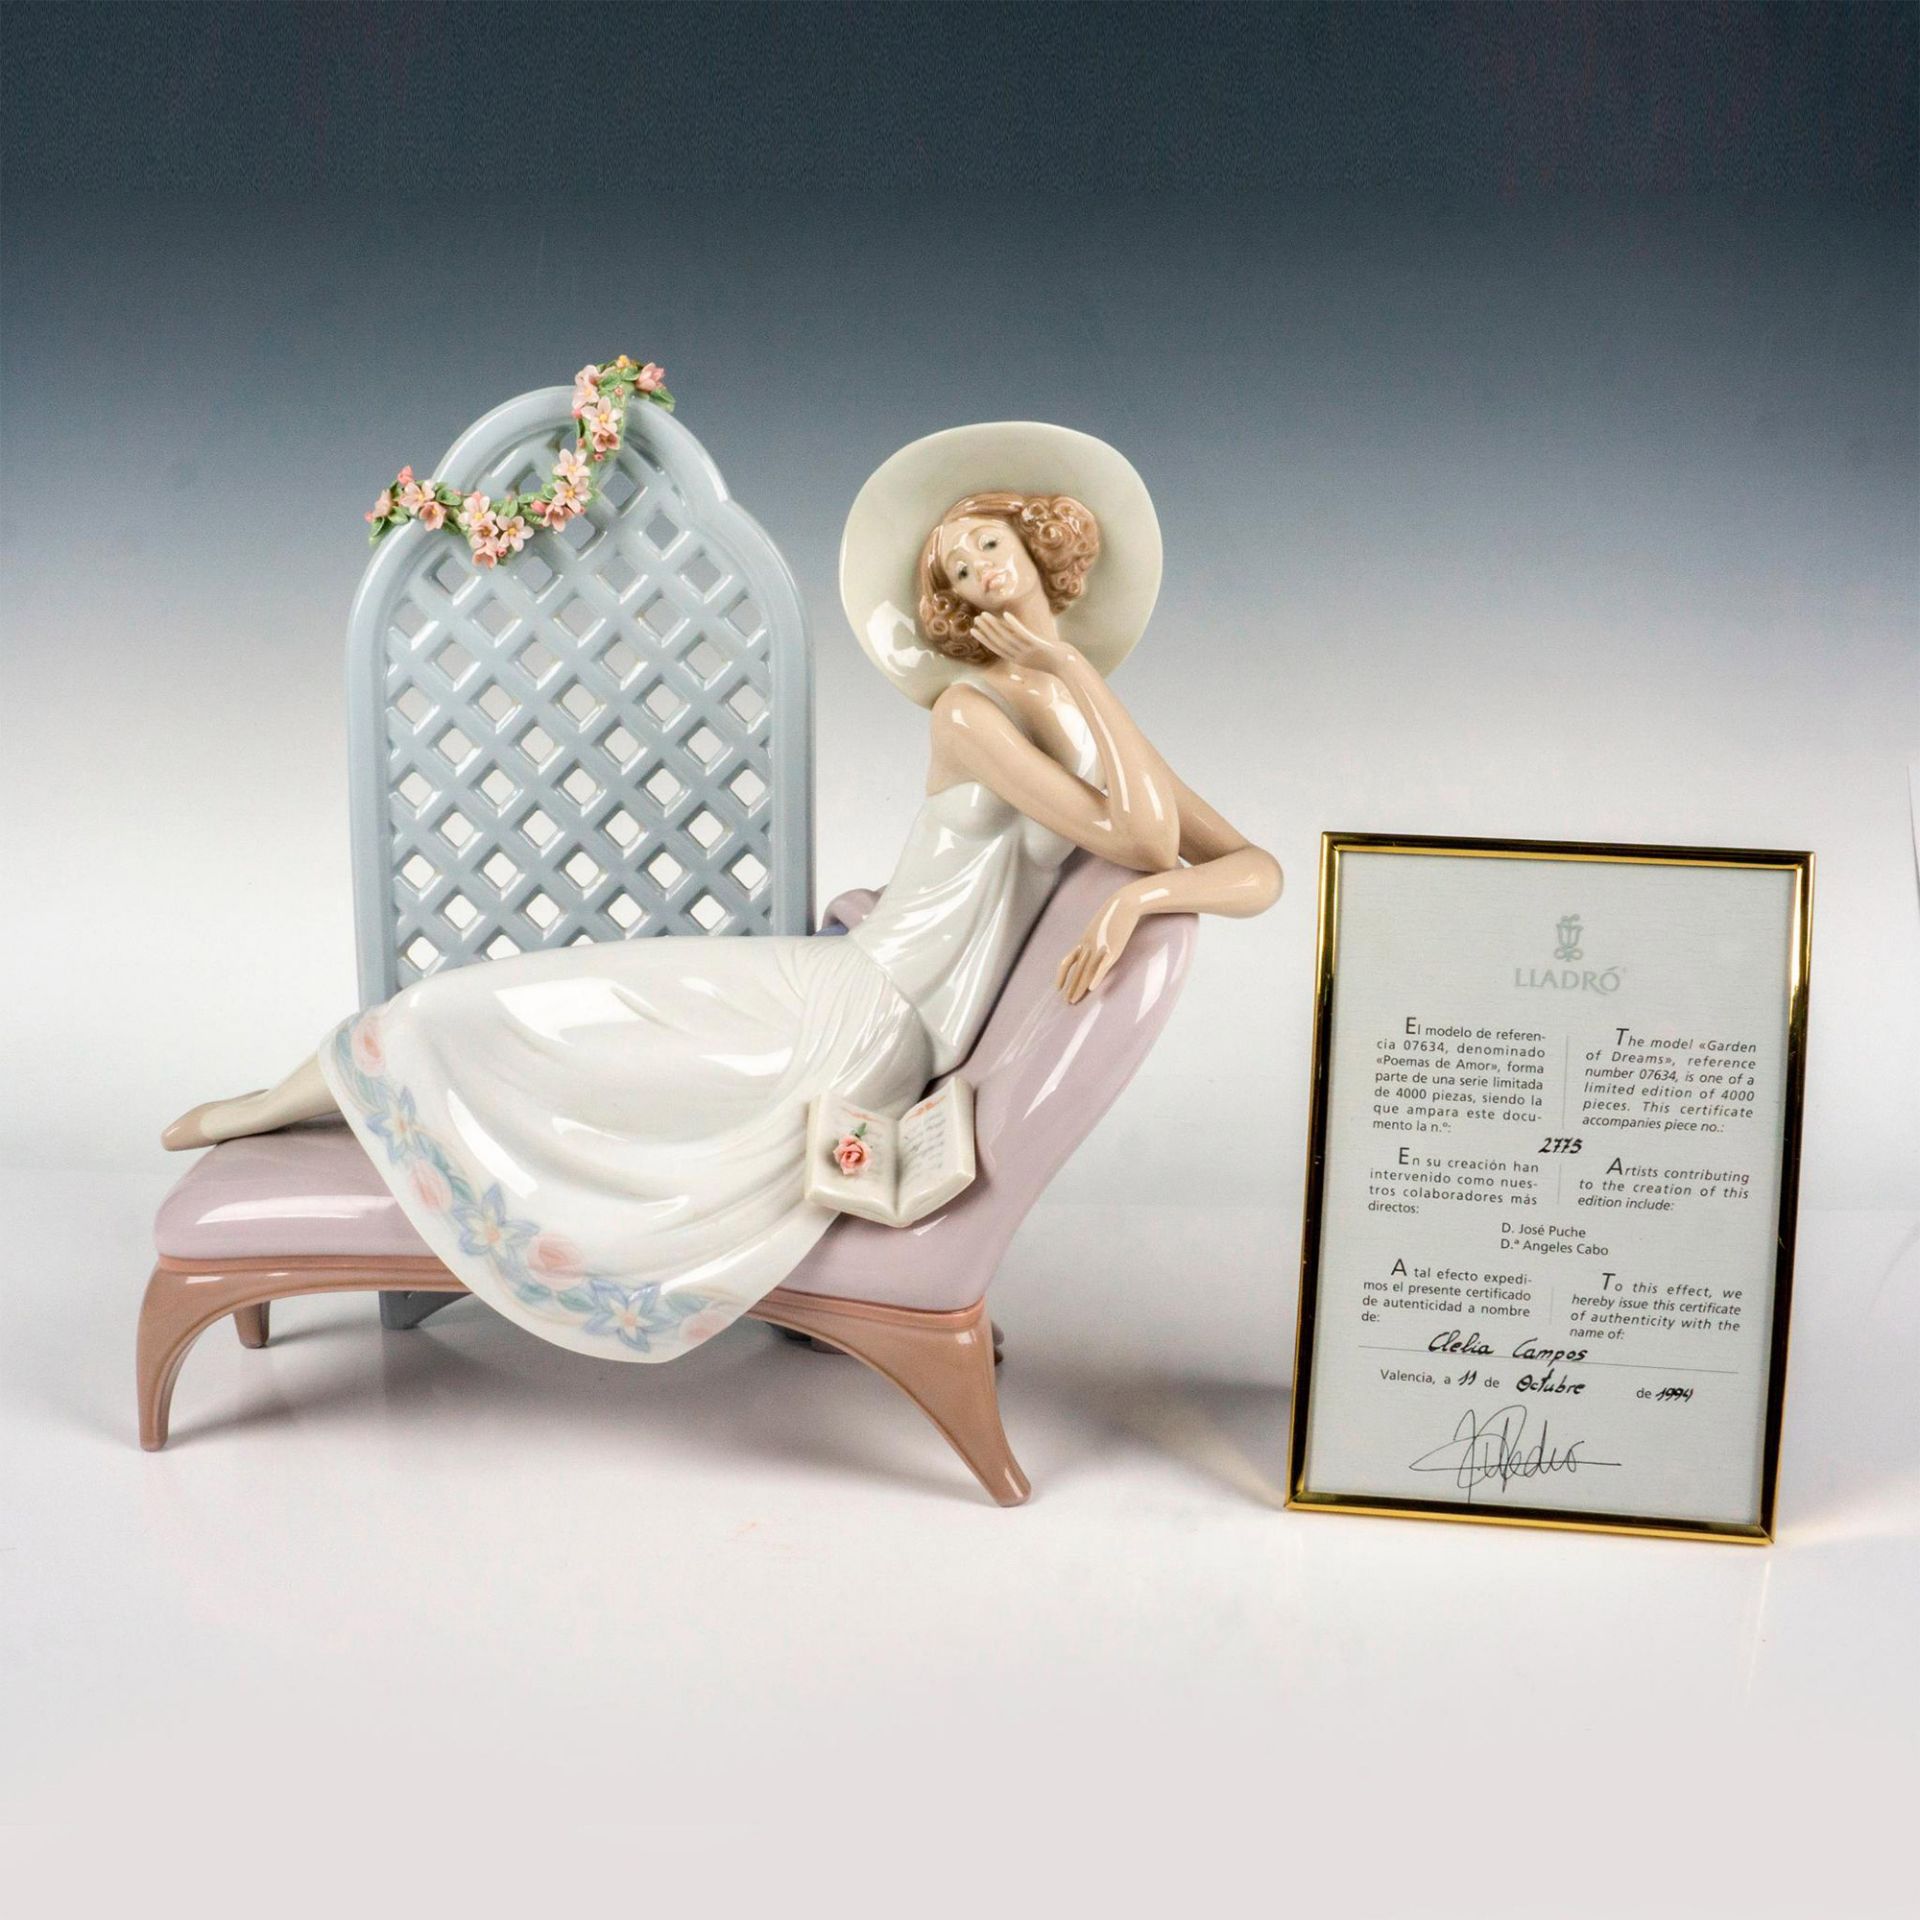 Garden Dreams 1007634 Ltd. - Lladro Porcelain Figurine - Image 2 of 7